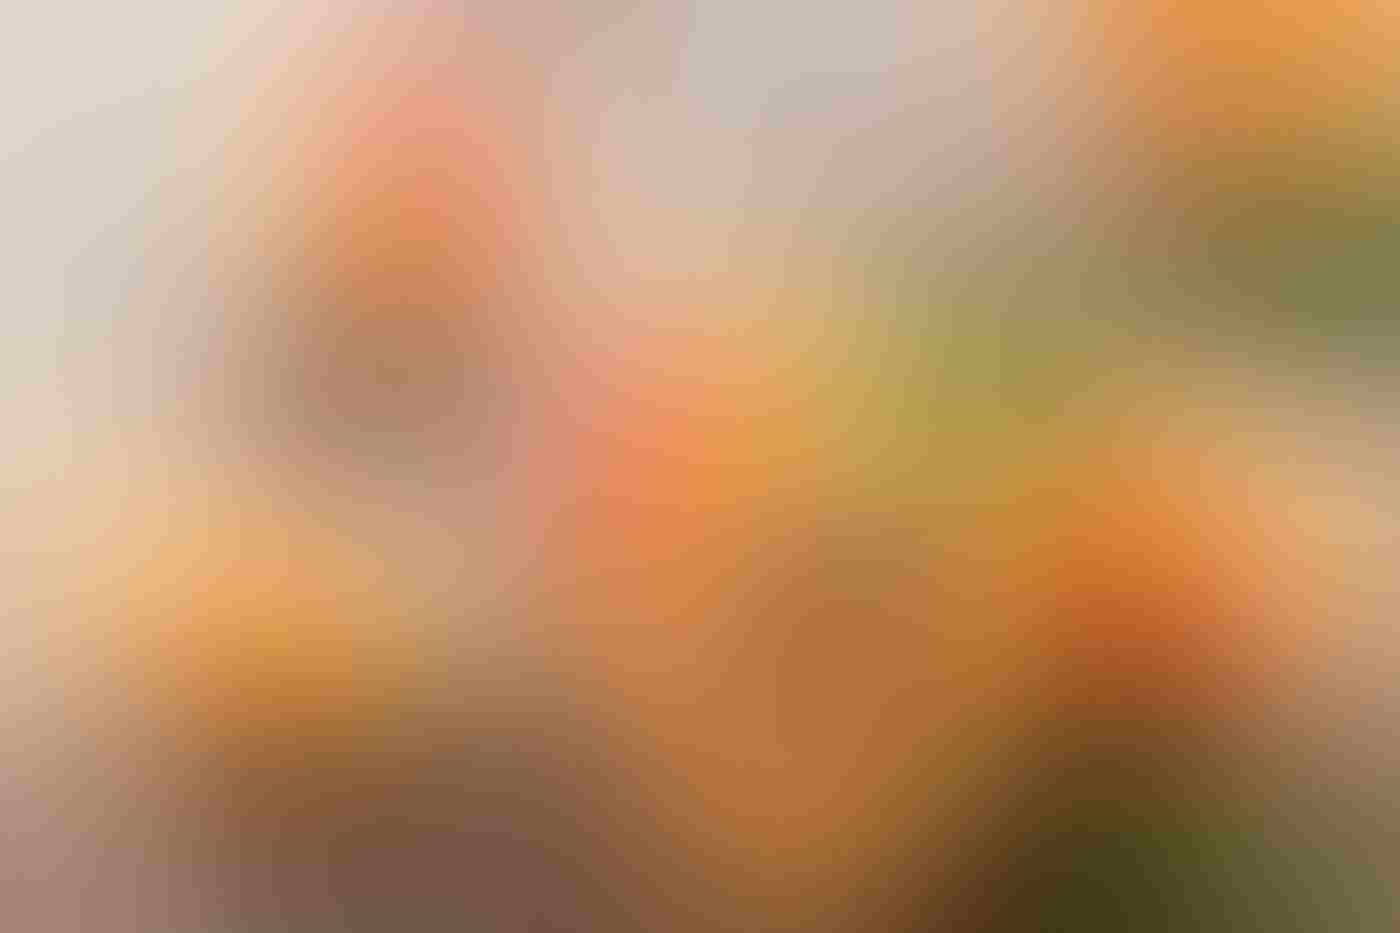 abstract blurring geometric elements